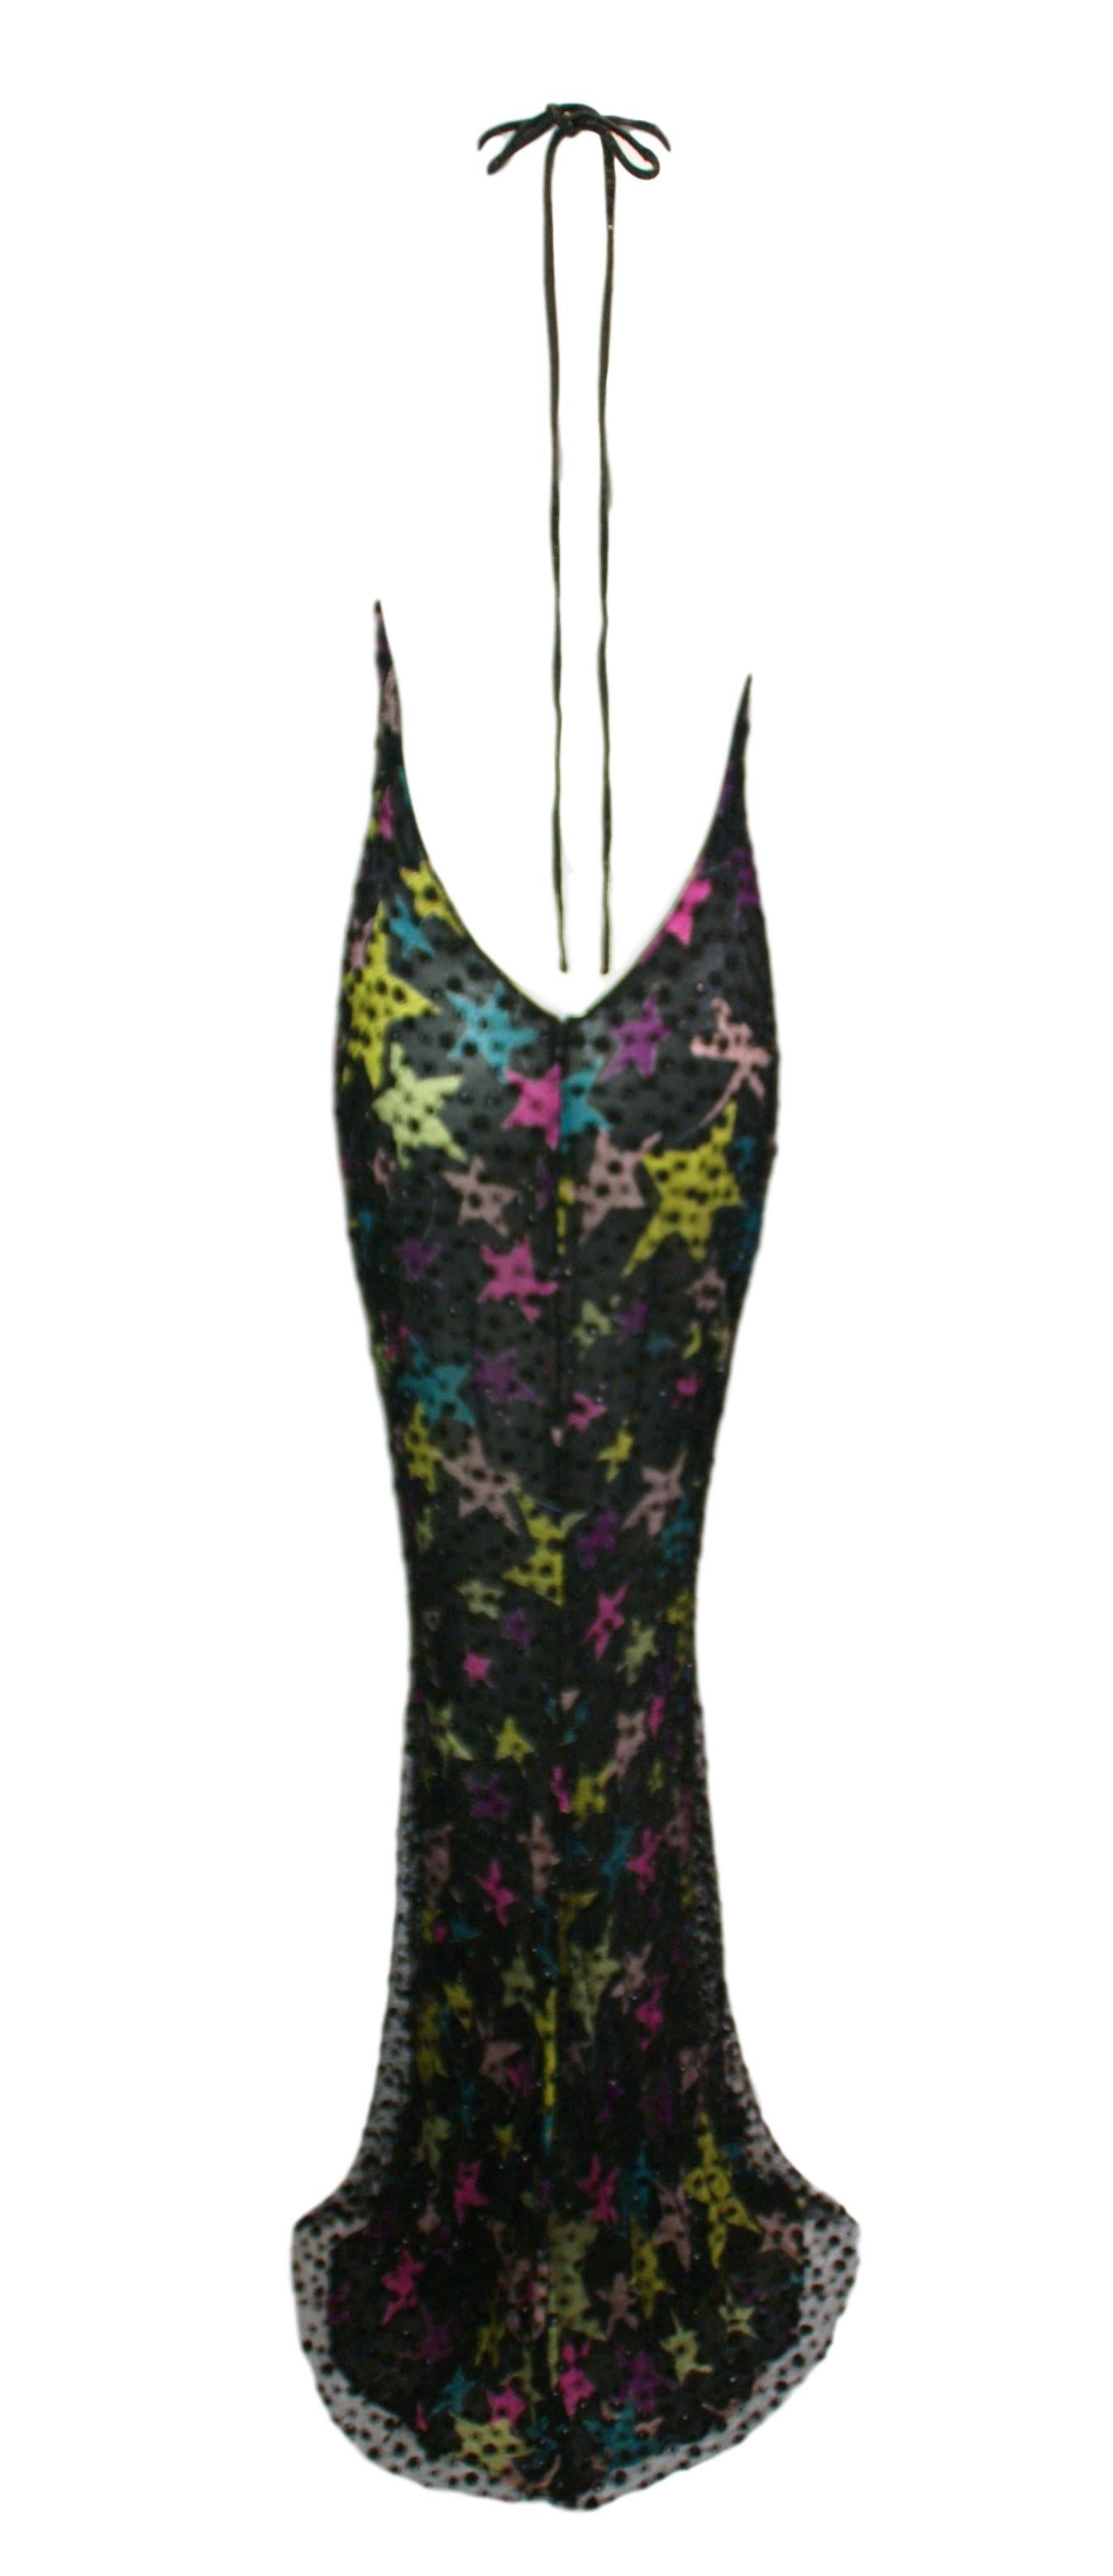 S/S 2002 Gianni Versace Sheer Star Print Silk Mesh Beaded Gown Dress 1